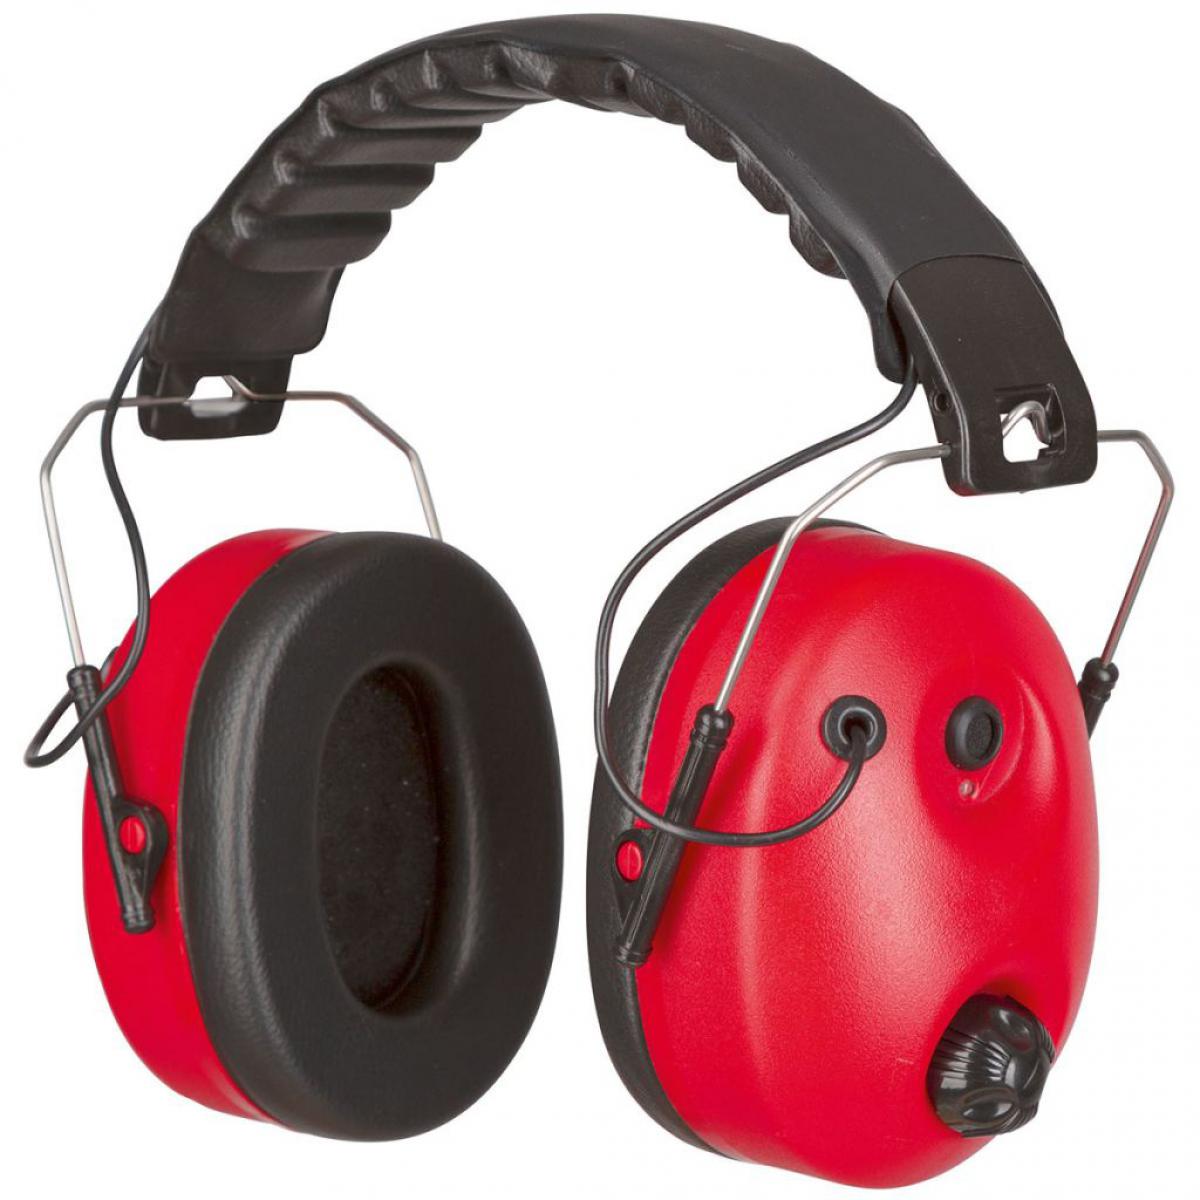 Kerbl - Kerbl Protection auditive Noise-Cancelling Rouge et noir 34490 - Protections corps